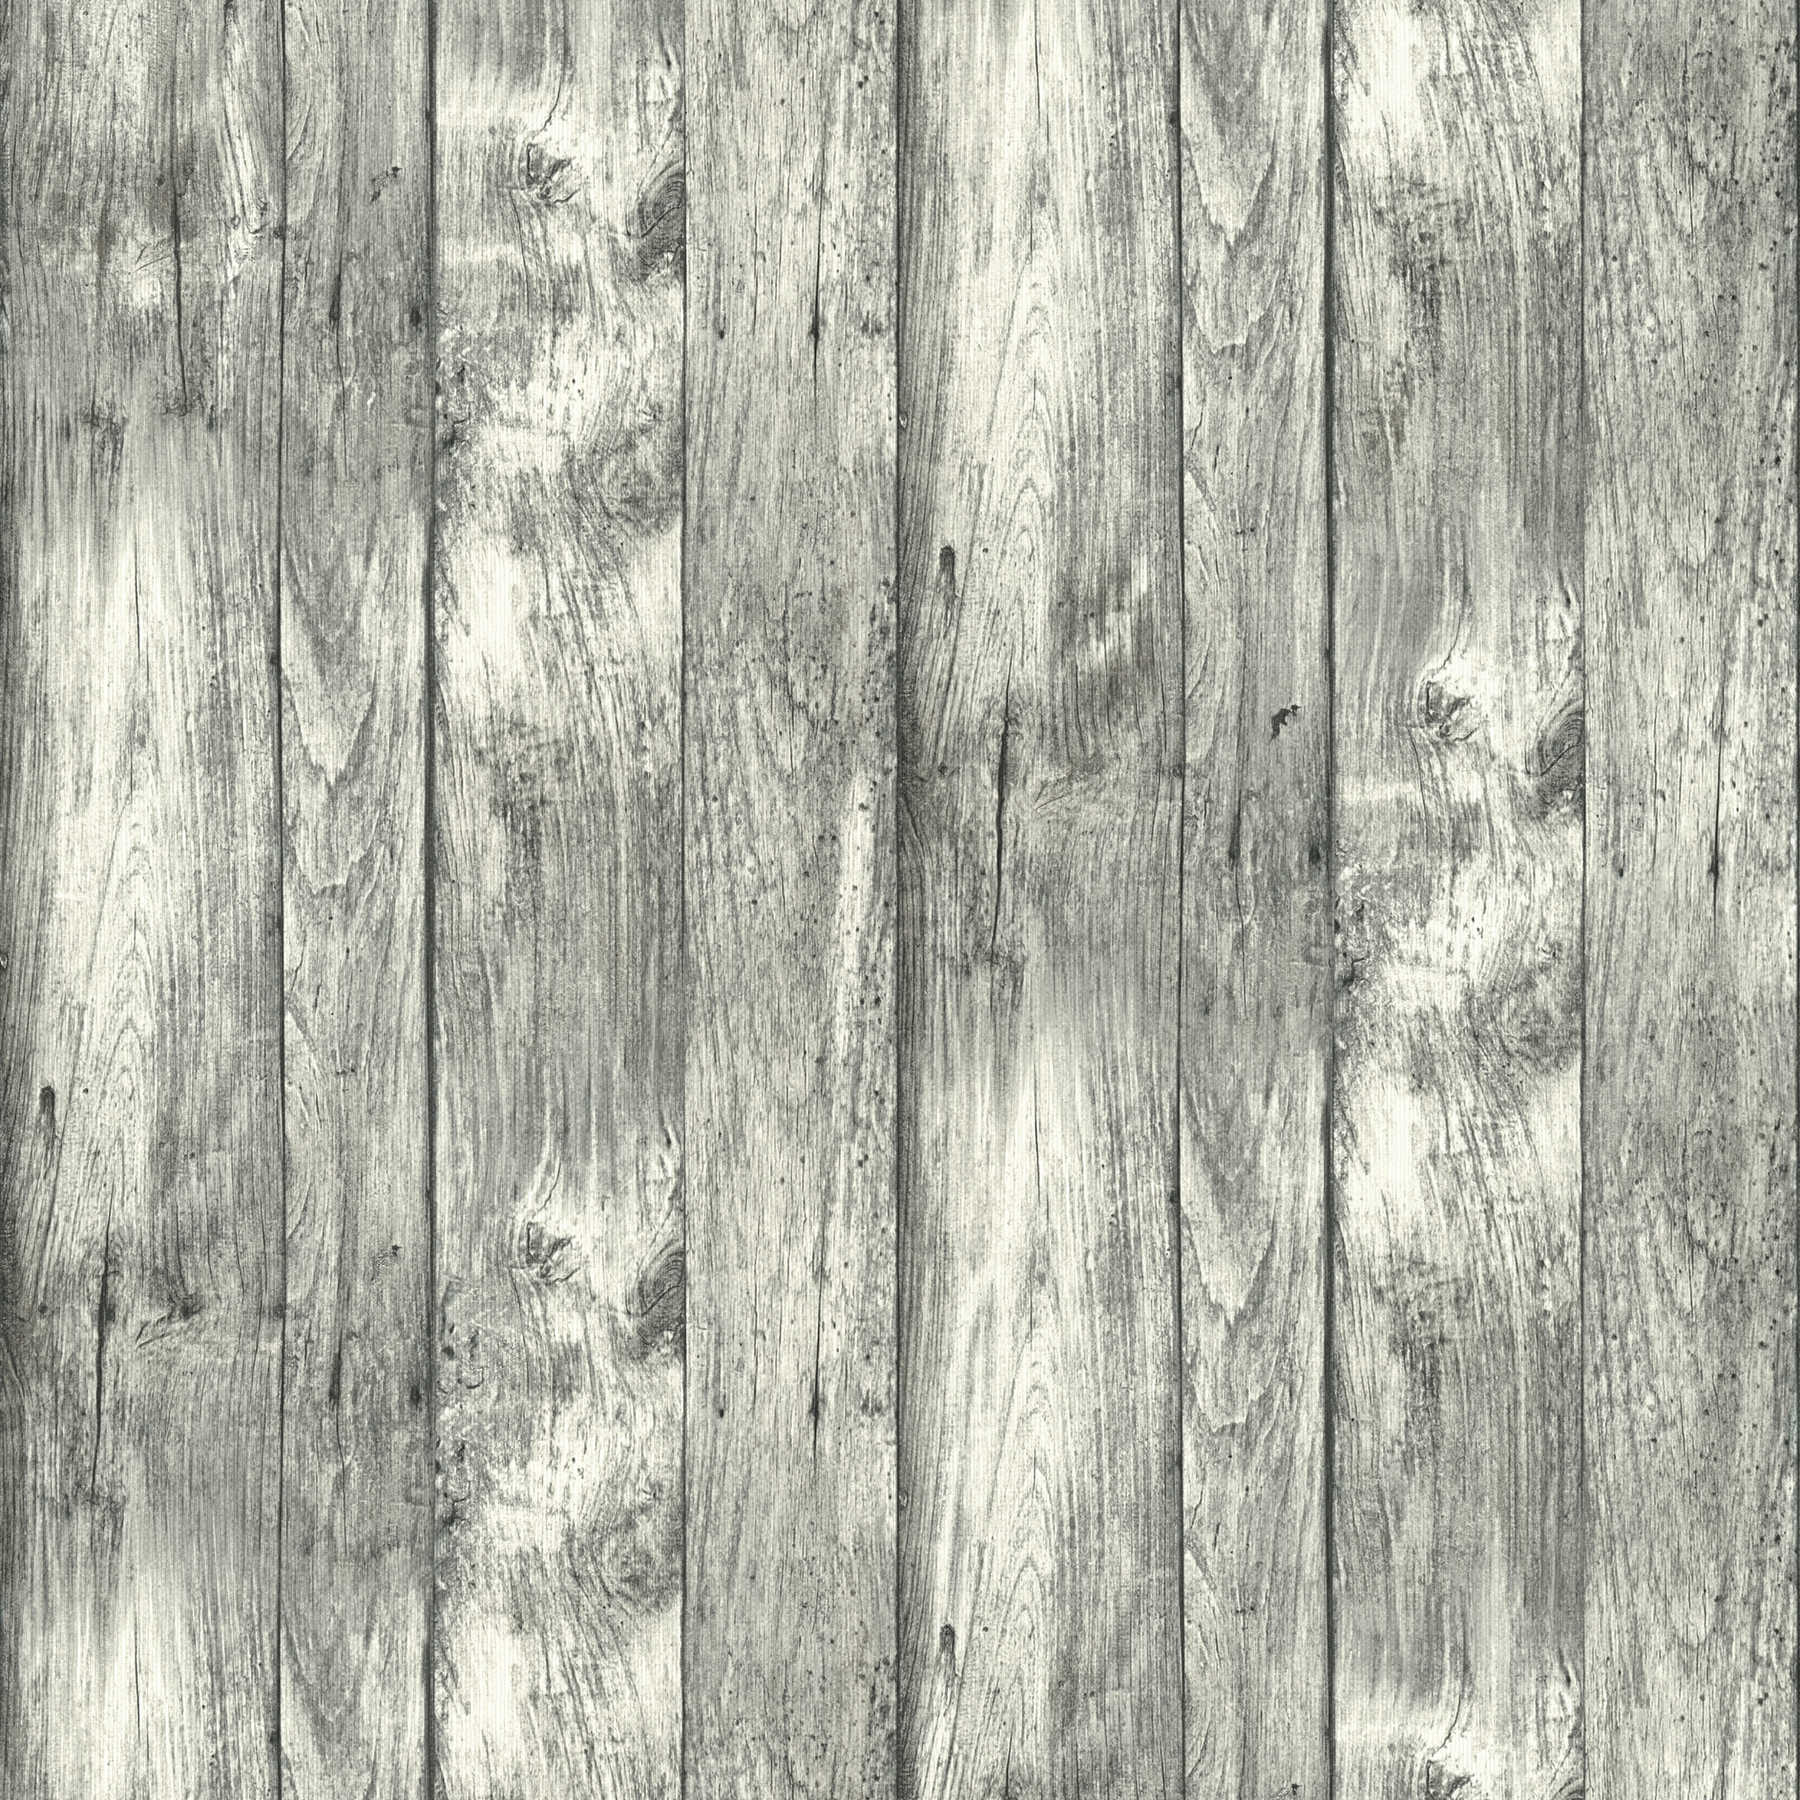 Wood look wallpaper 3D boards in industrial look - grey
